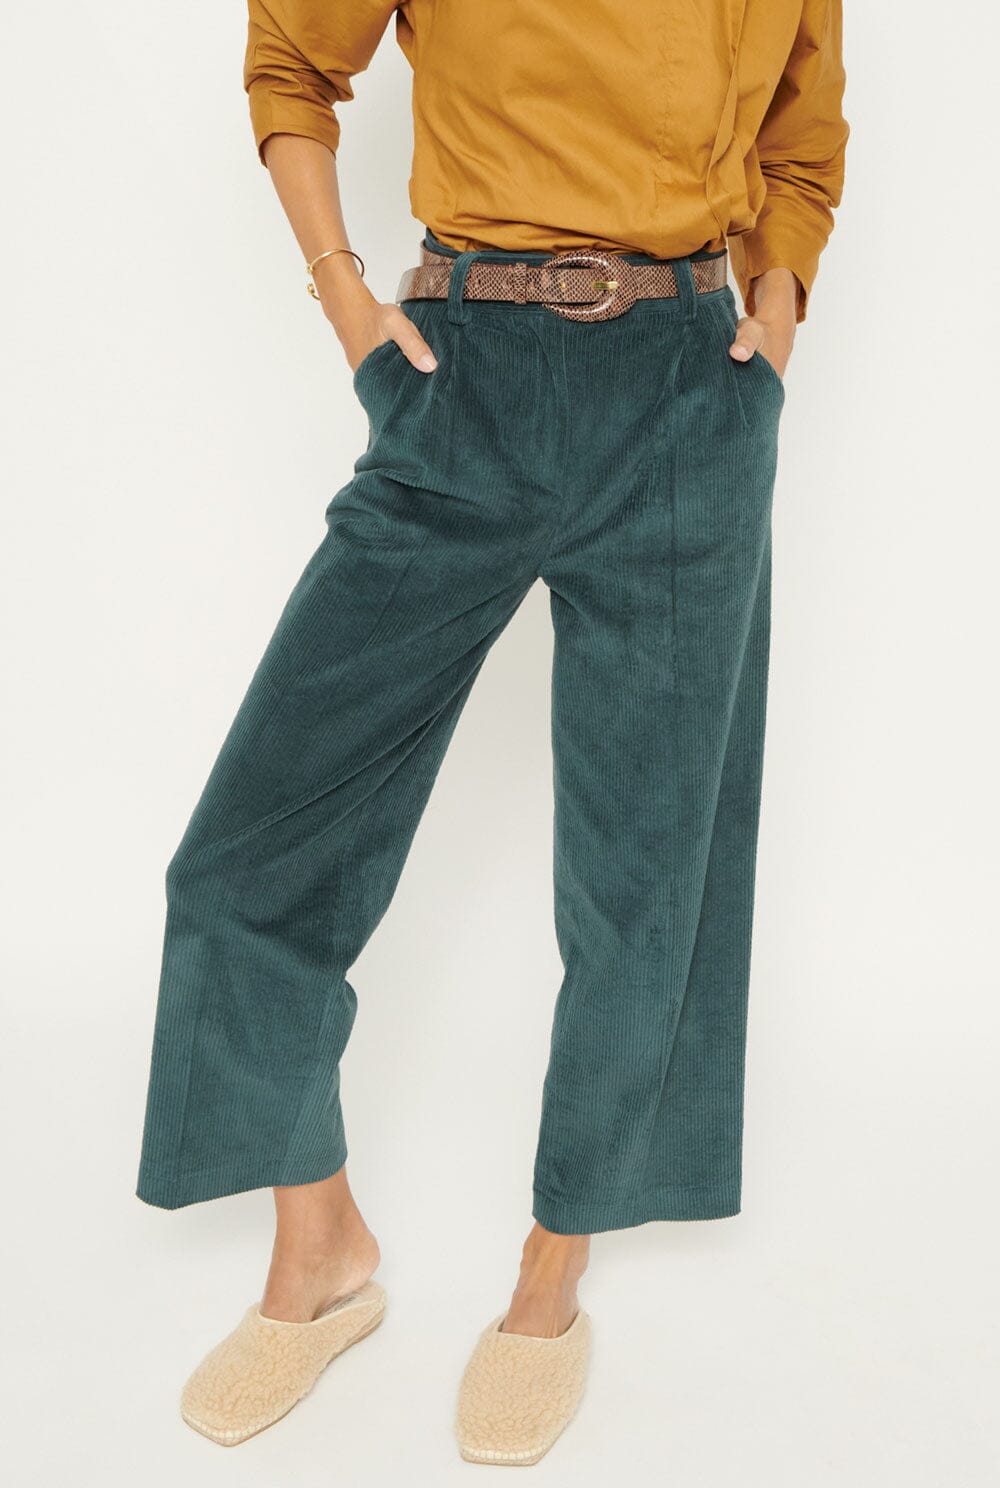 Pantalon Wynda Verde Trousers Kolonaki 